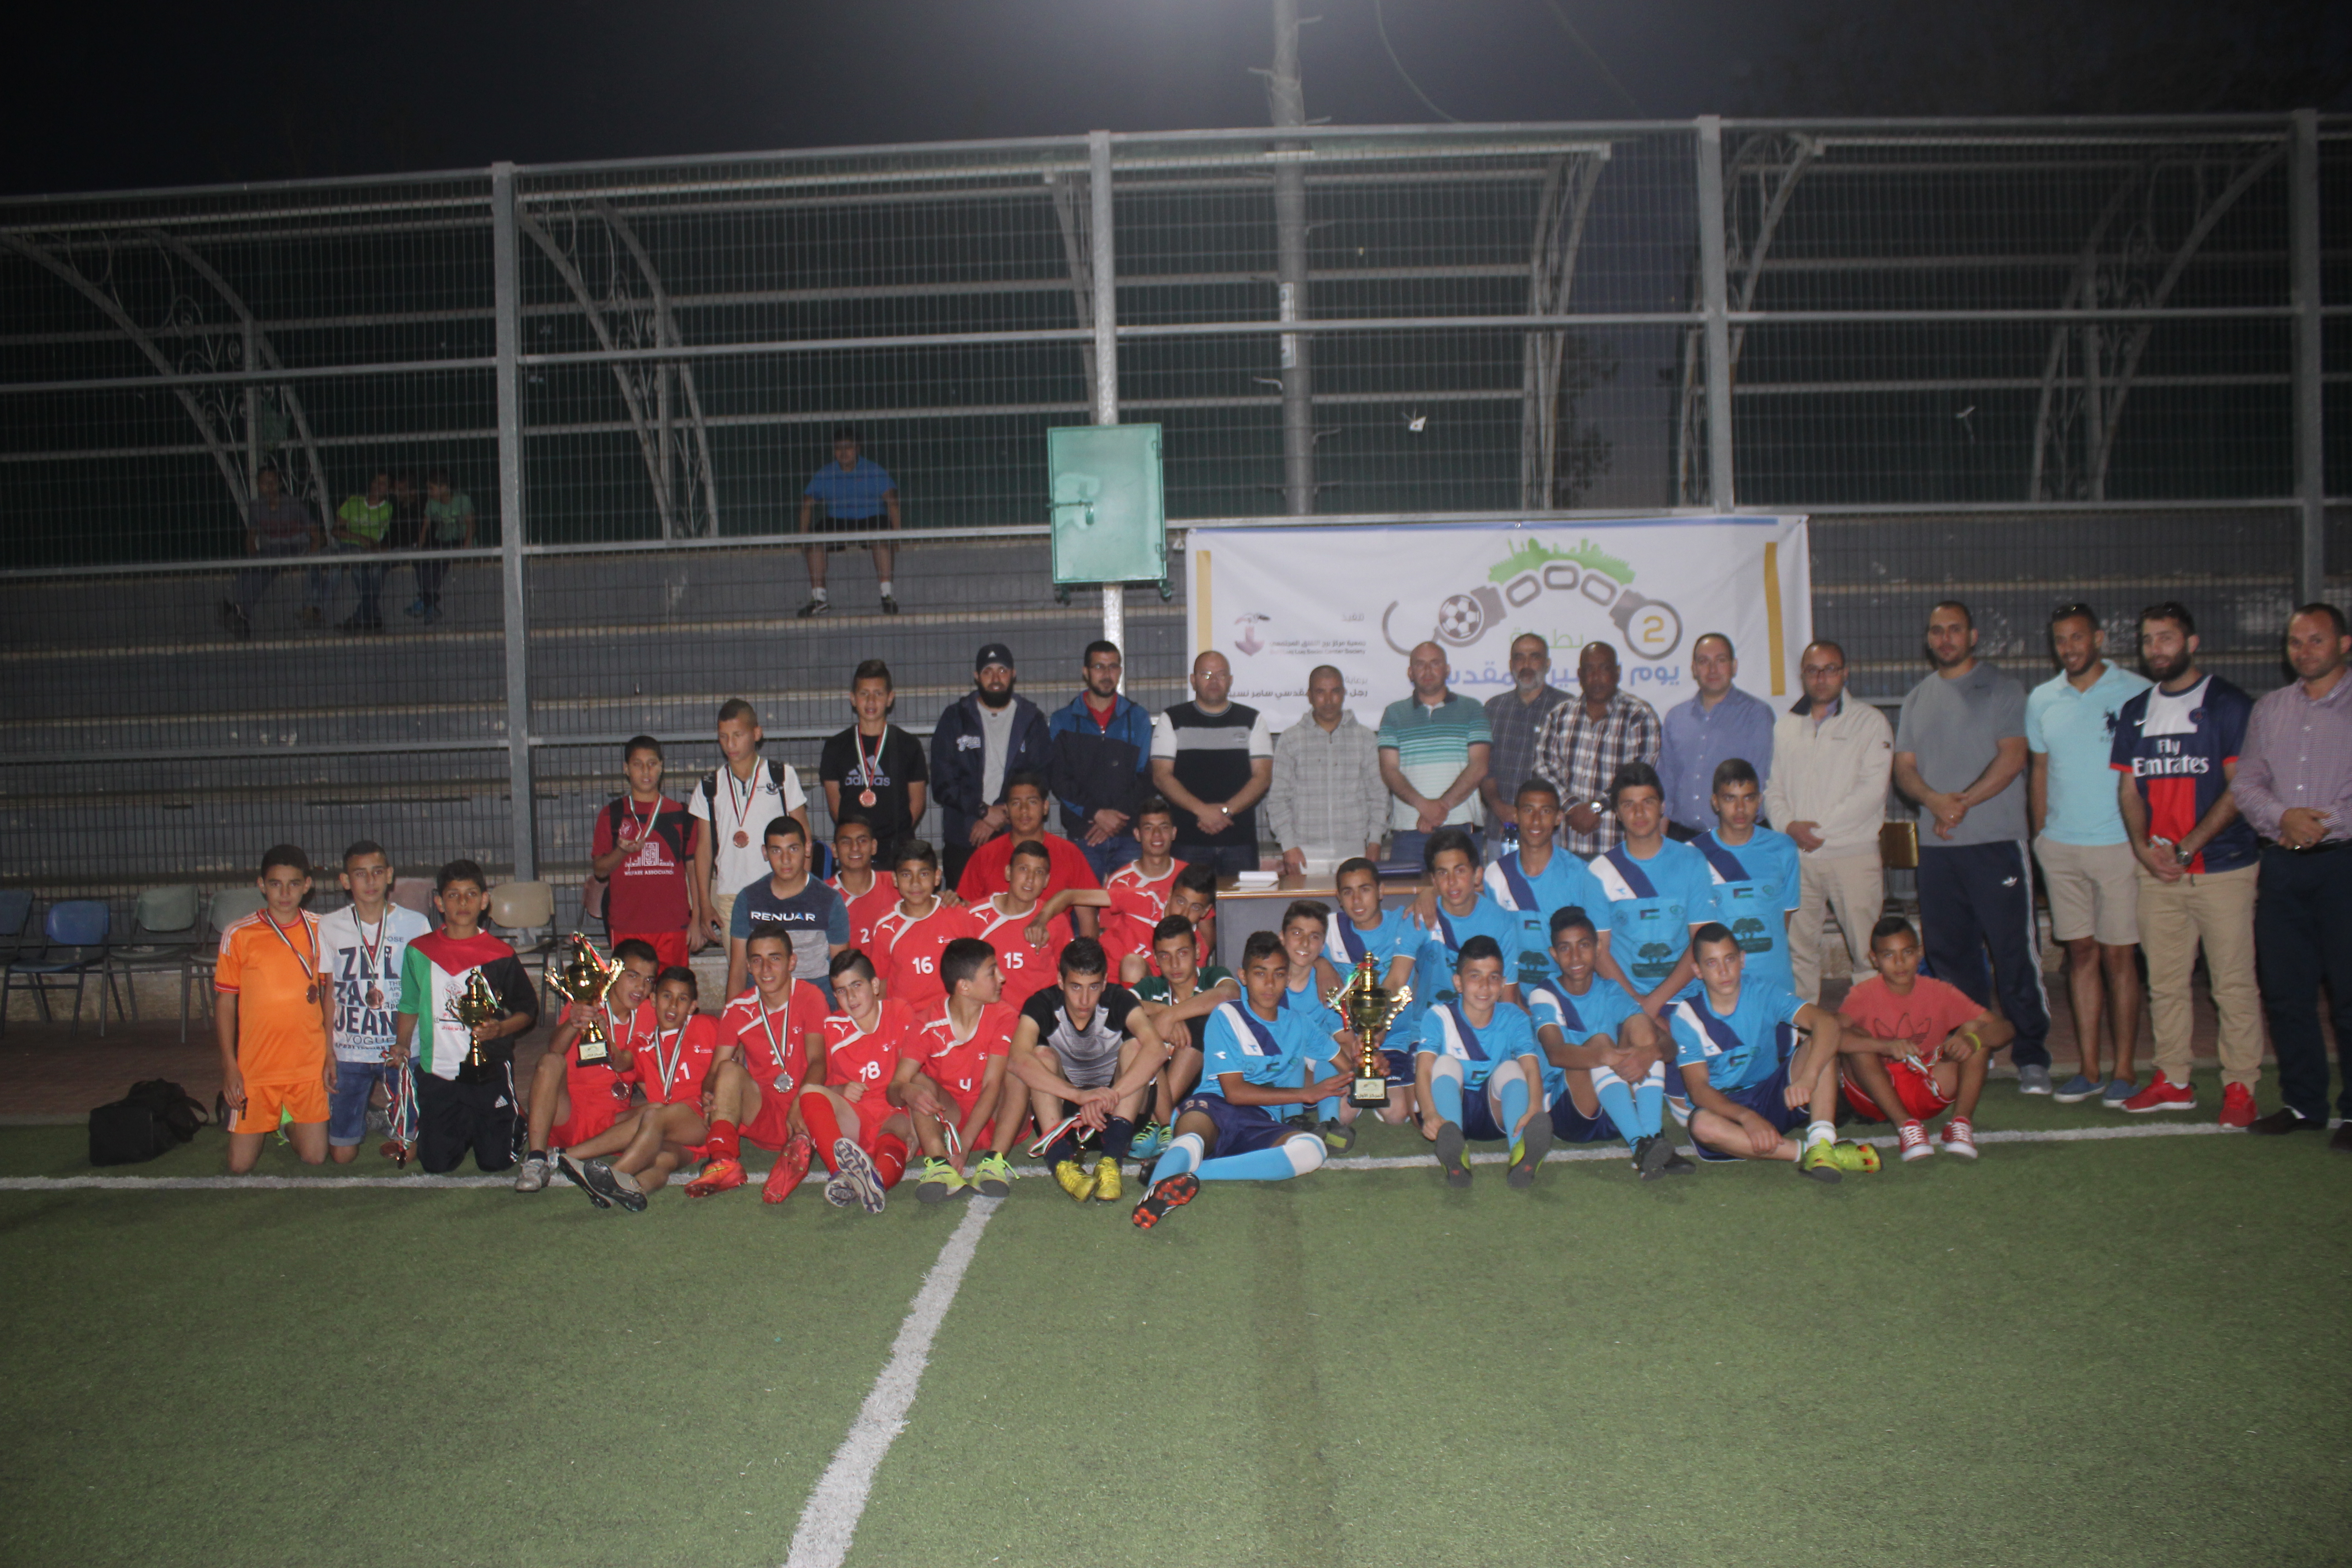 Jerusalemite Prisoner’s Day Tournament – sponsored by the Businessman Samer Nseibeh Honoring Three Jerusalemite teams on Burj Al-Luqluq Facilities